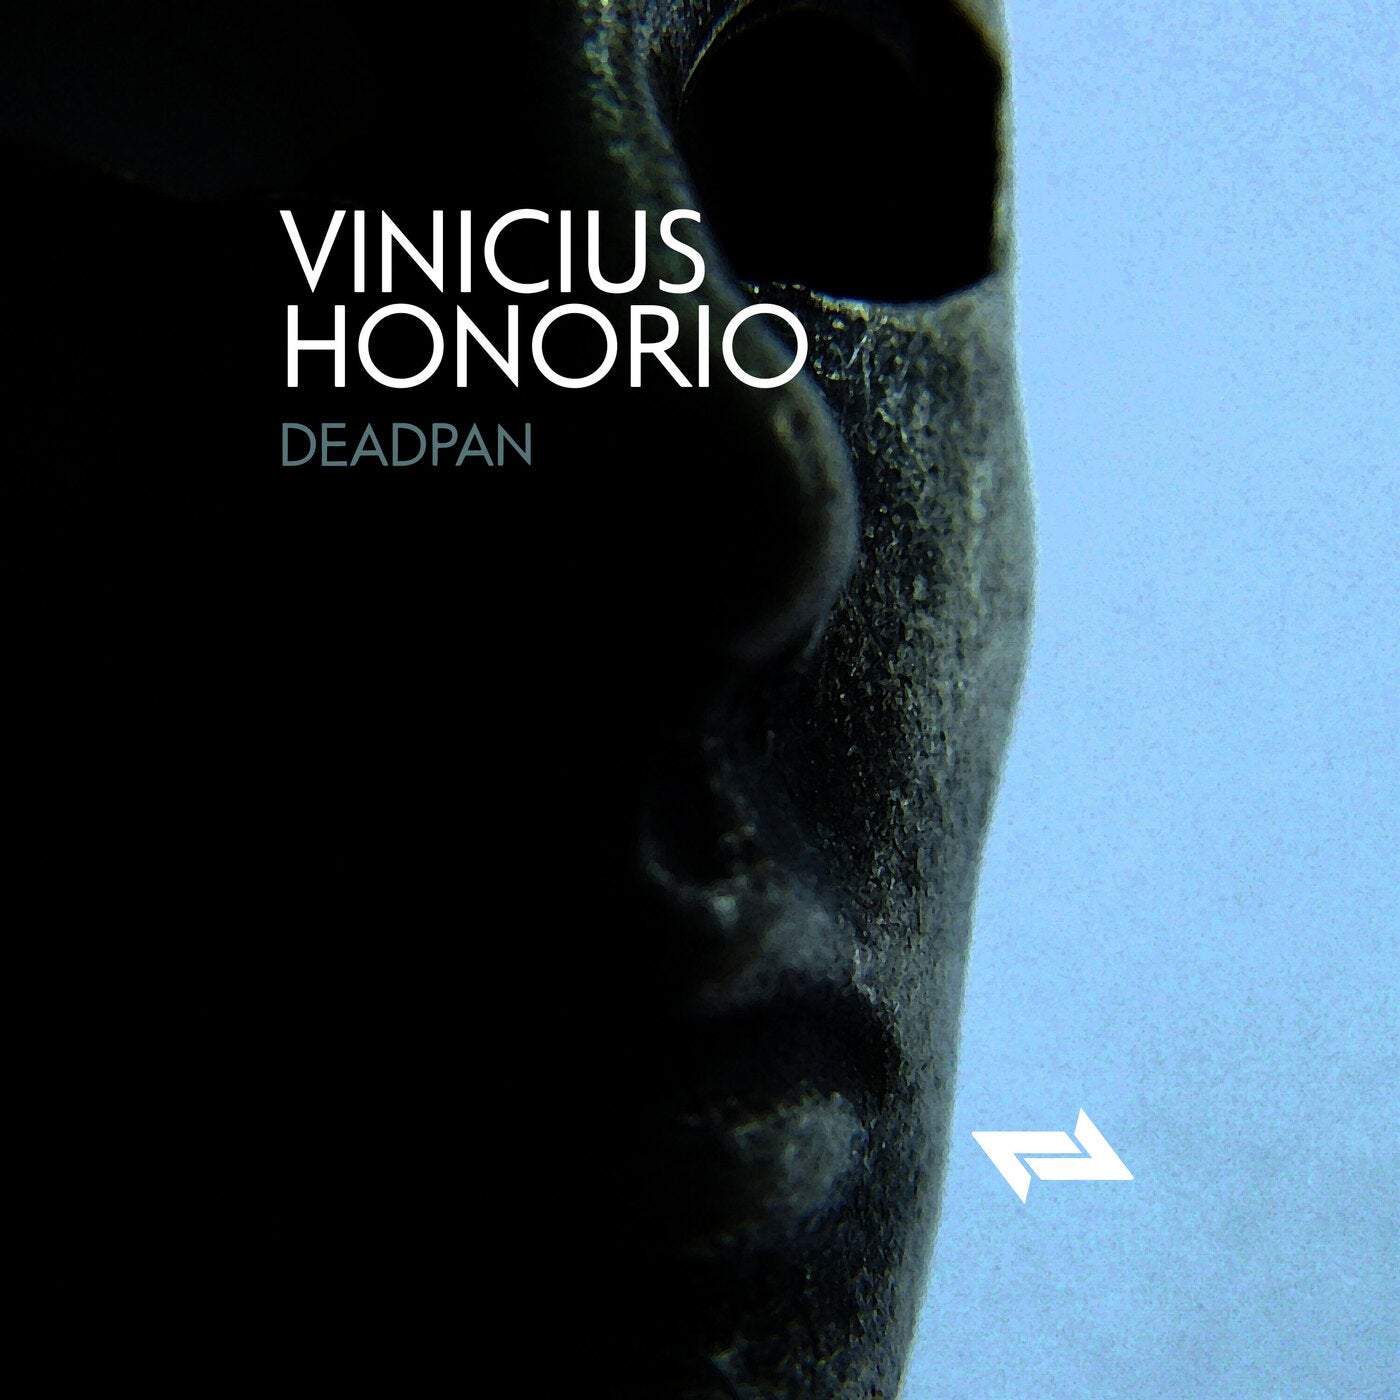 Download Vinicius Honorio - Deadpan on Electrobuzz